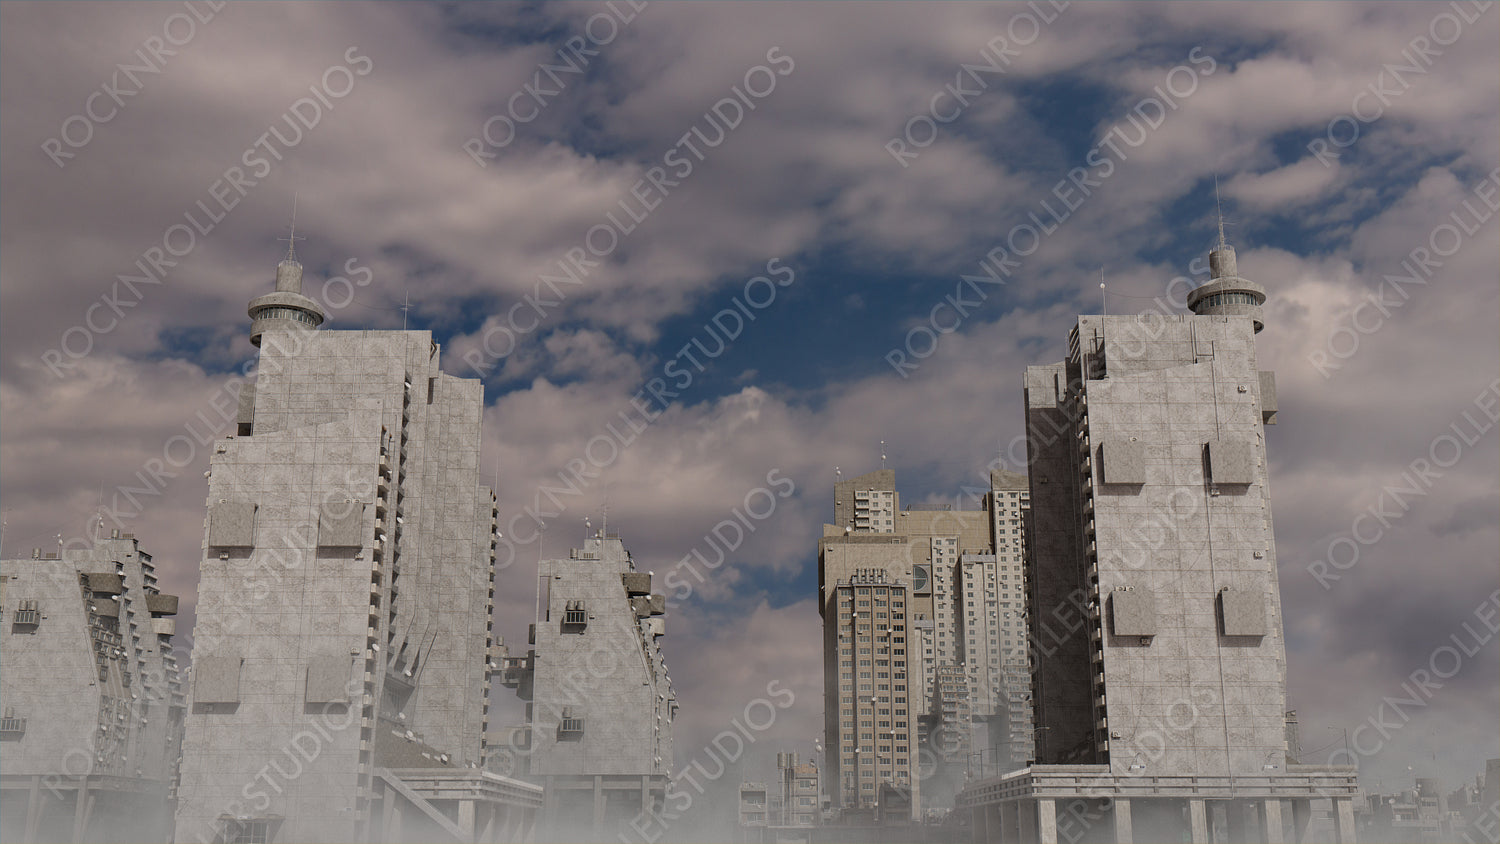 Concrete City Skyline. Soviet Modernist Buildings against a Cloudy Afternoon Sky.